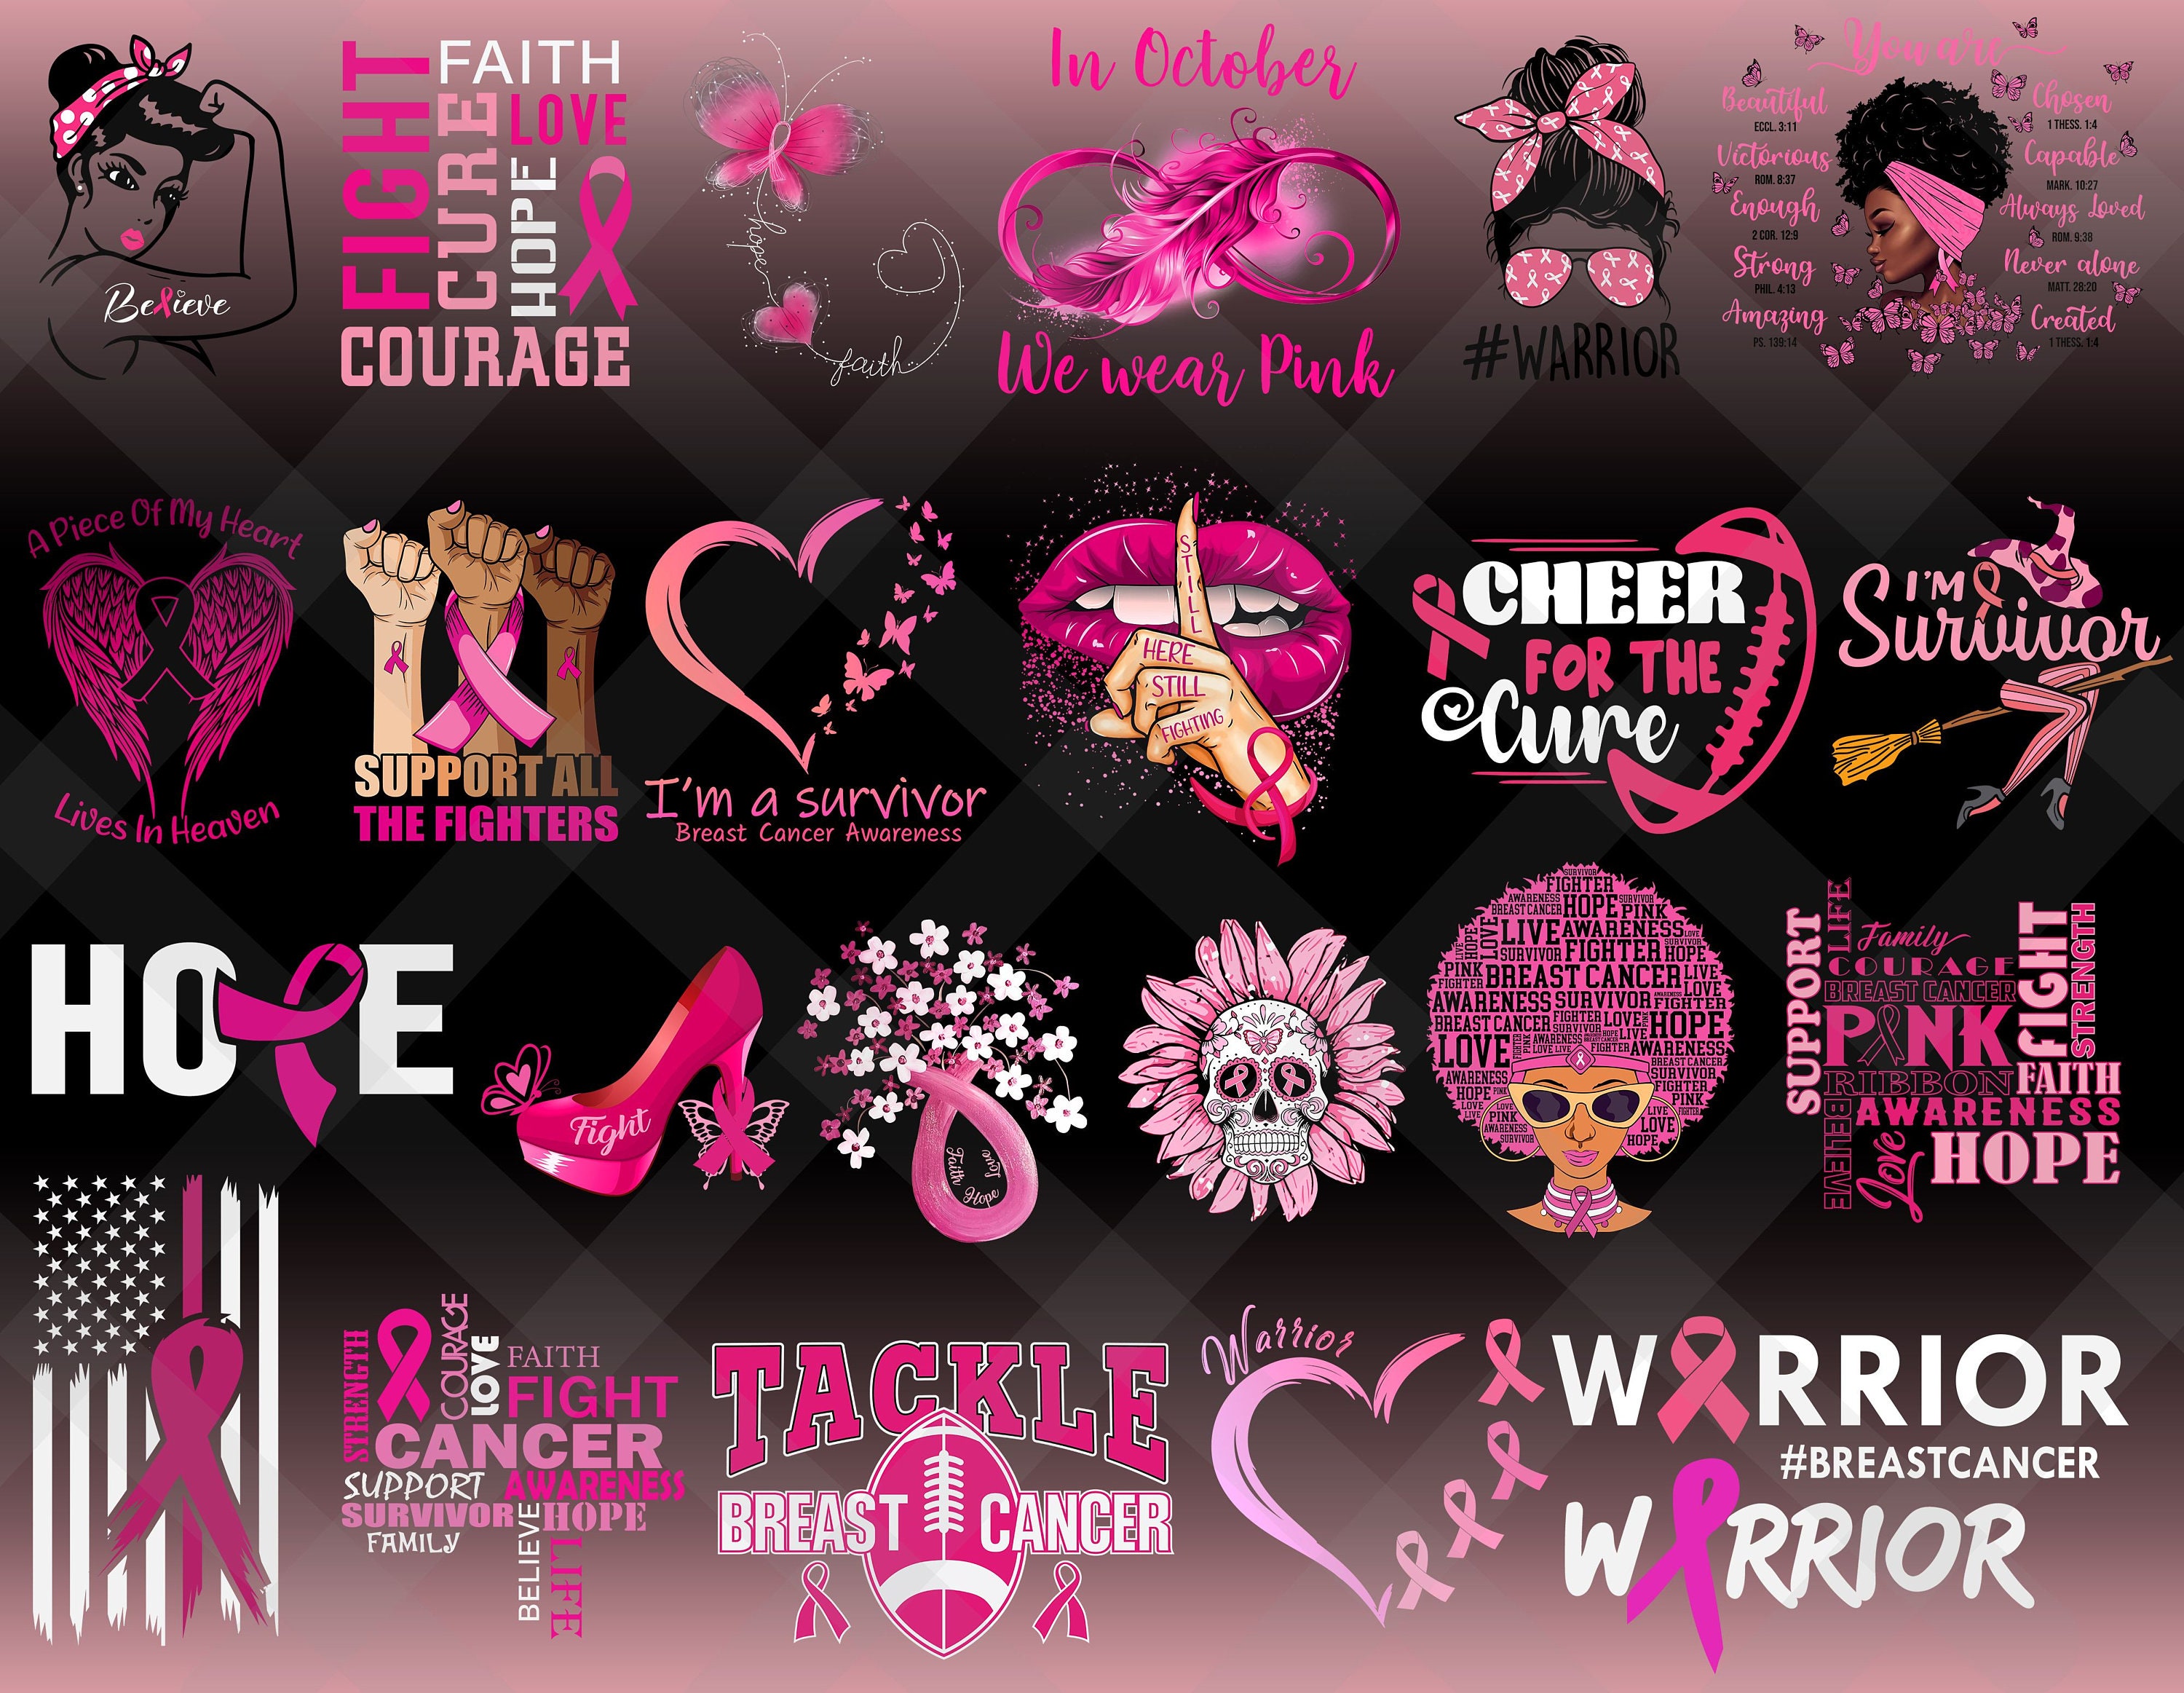 Fight Like A Girl Breast Cancer Awareness CUSTOM Air Jordan 13 -   Worldwide Shipping